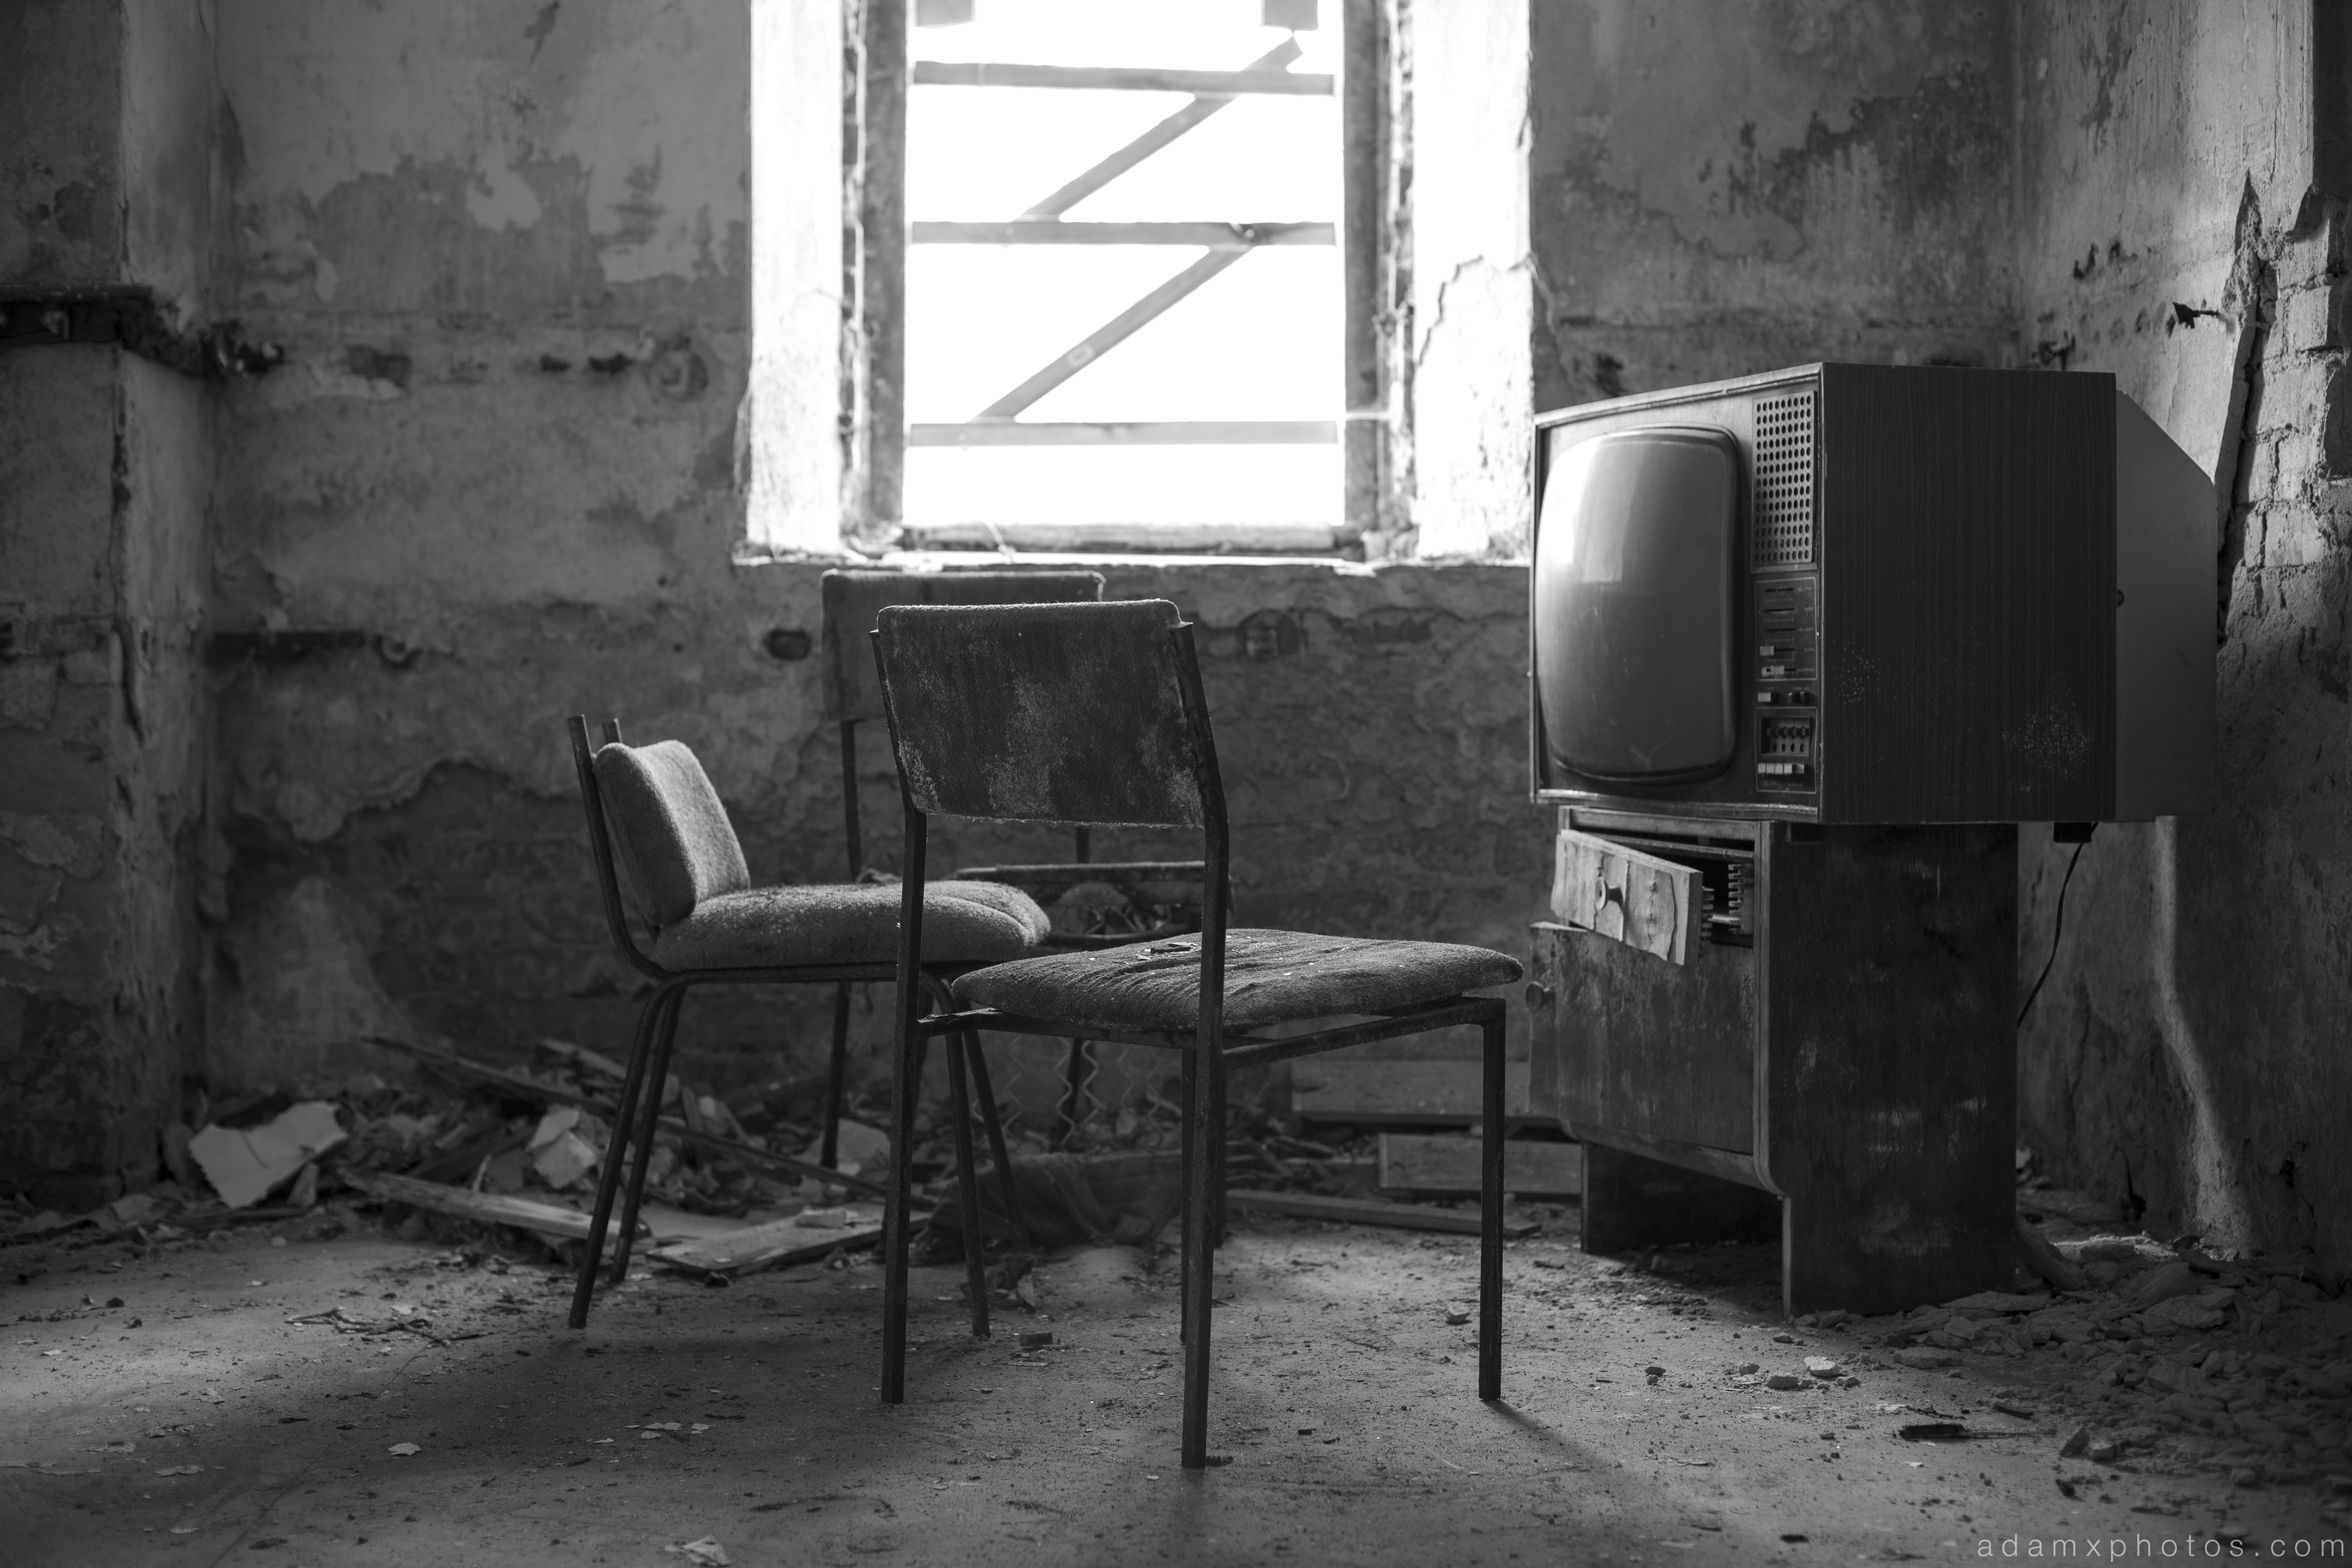 Basement black and white old television TV Villa Symmetry Urbex Germany Adam X Urban Exploration Access 2016 Abandoned decay lost forgotten derelict location Deutschland